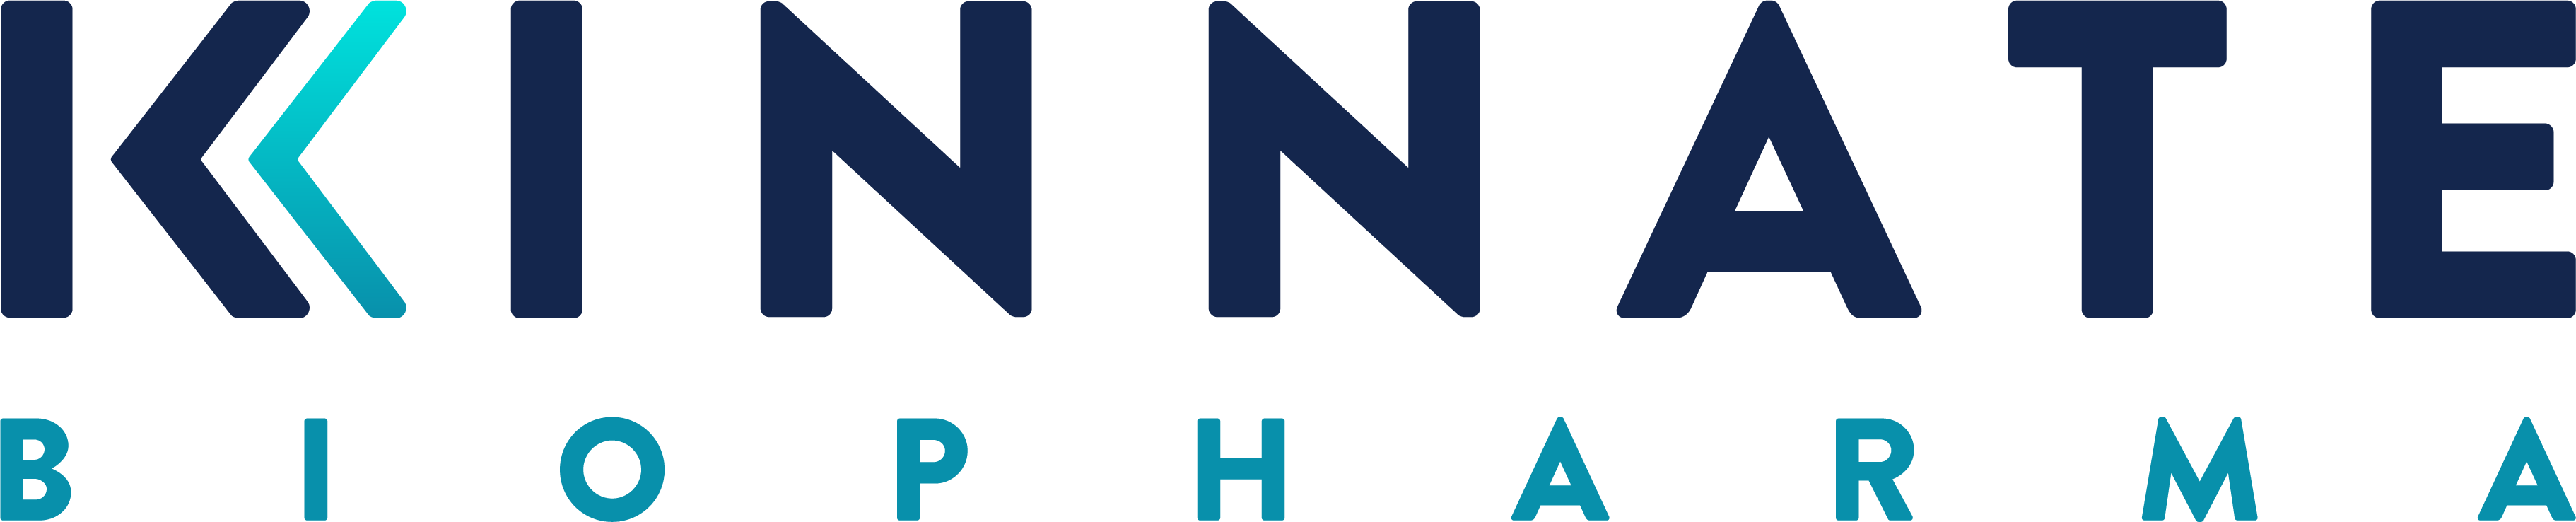 Kinnate Biopharma Inc. logo